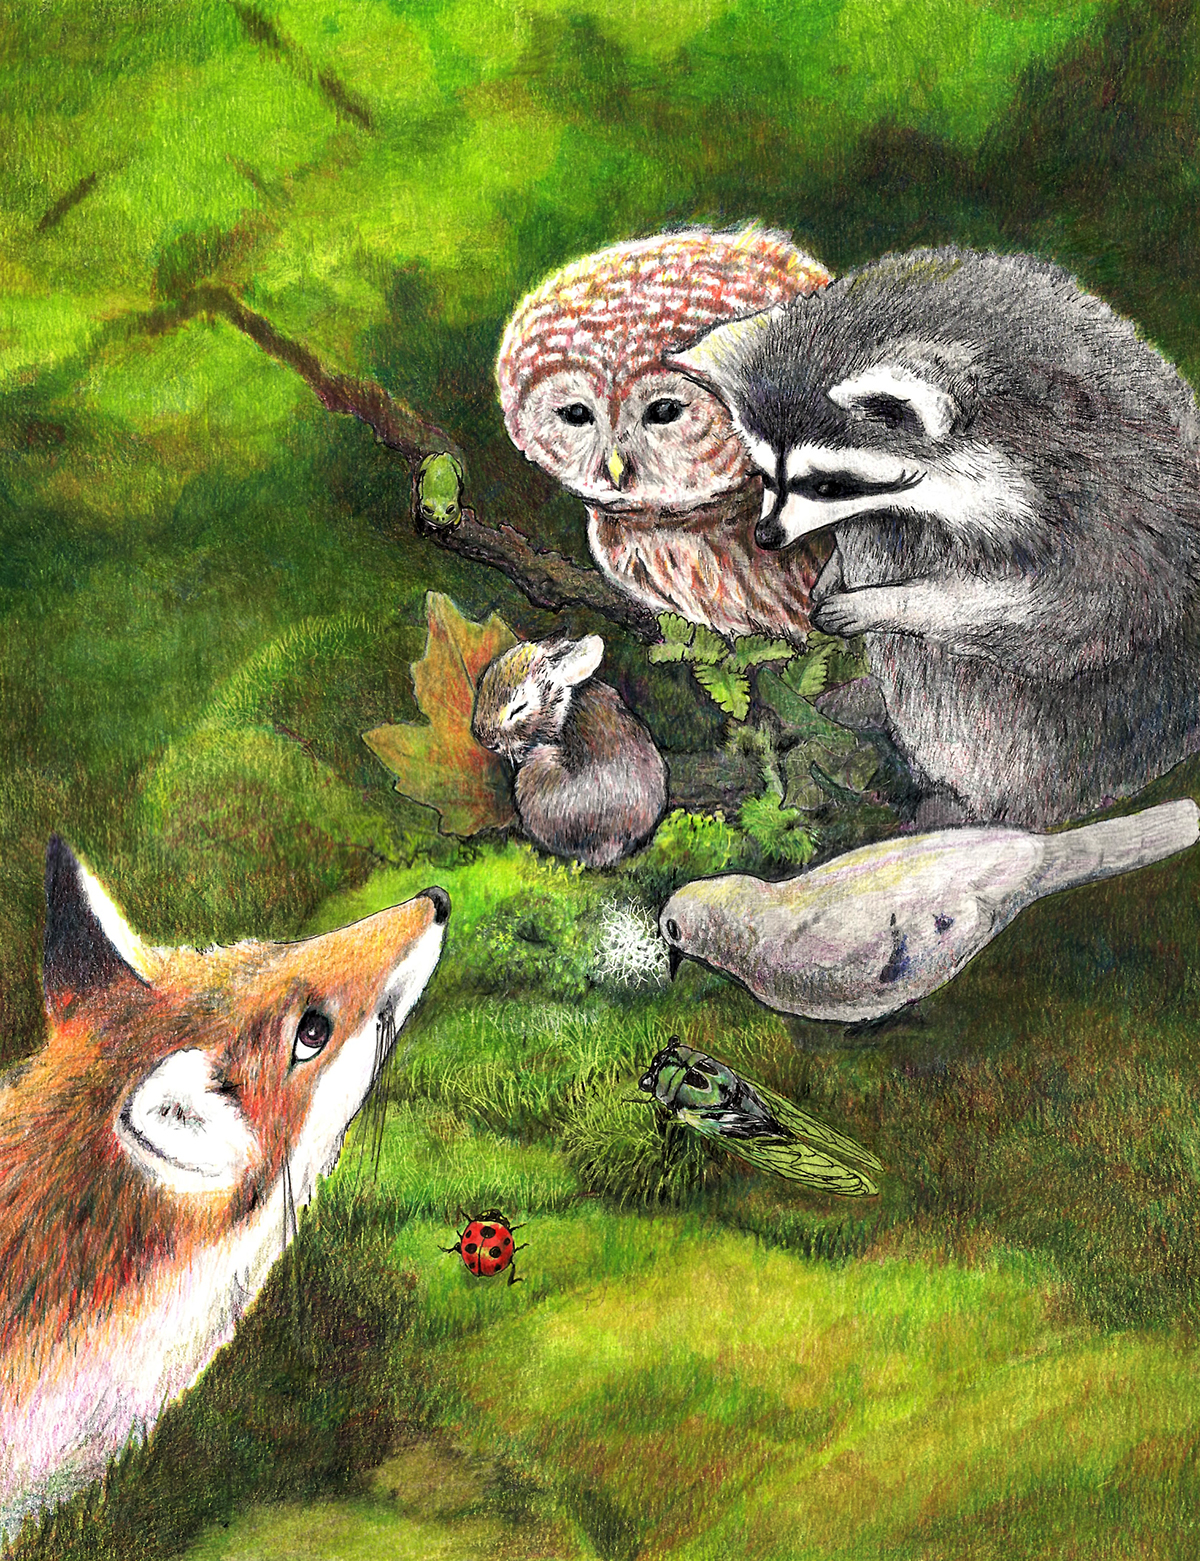 storybook children's illustration forest creatures forest bunny rabbit owl ladybug cicada FOX treefrog frog woodland animals